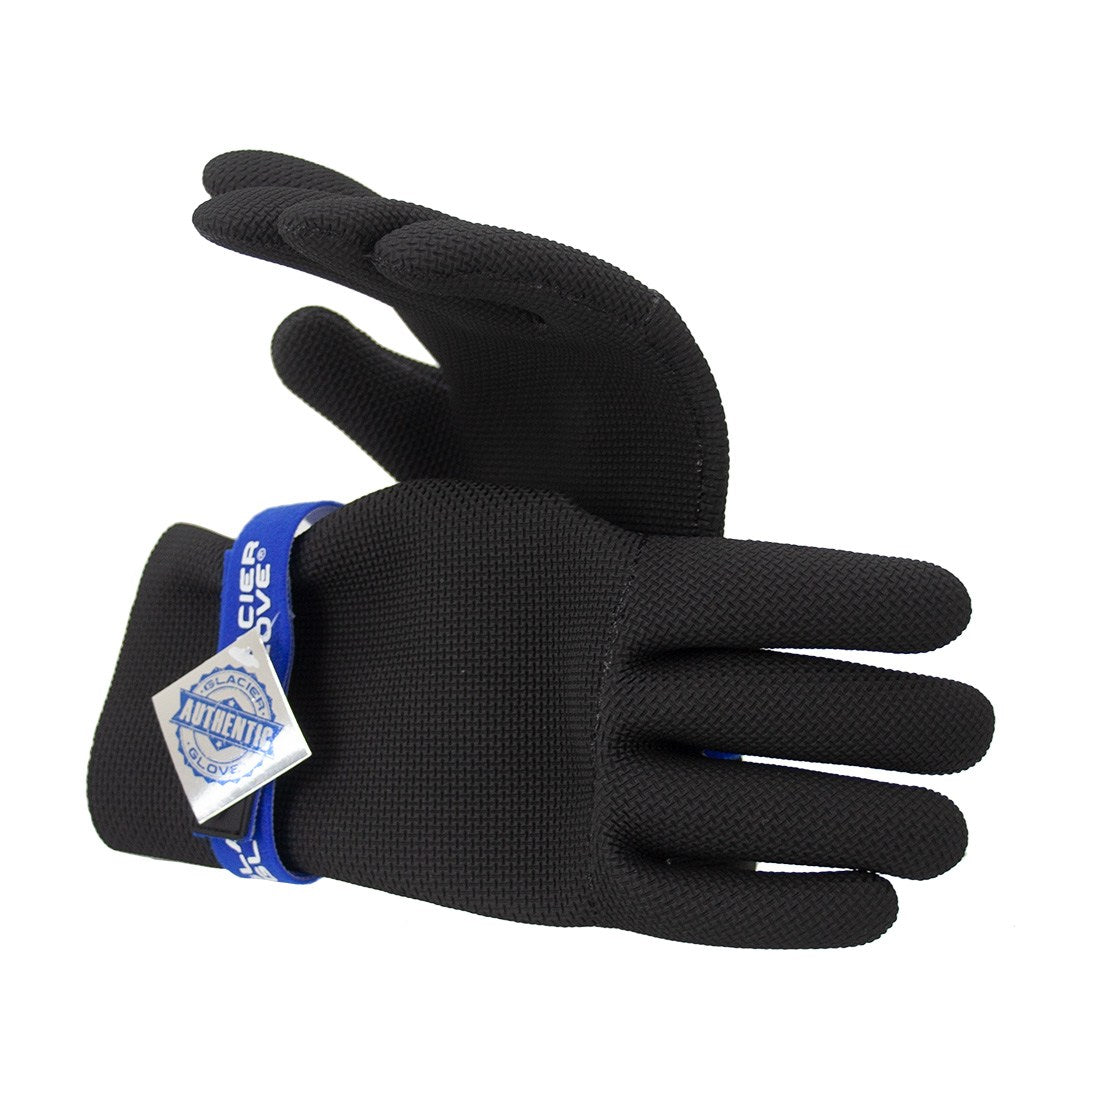 Best Waterproof Fishing Gloves Prices